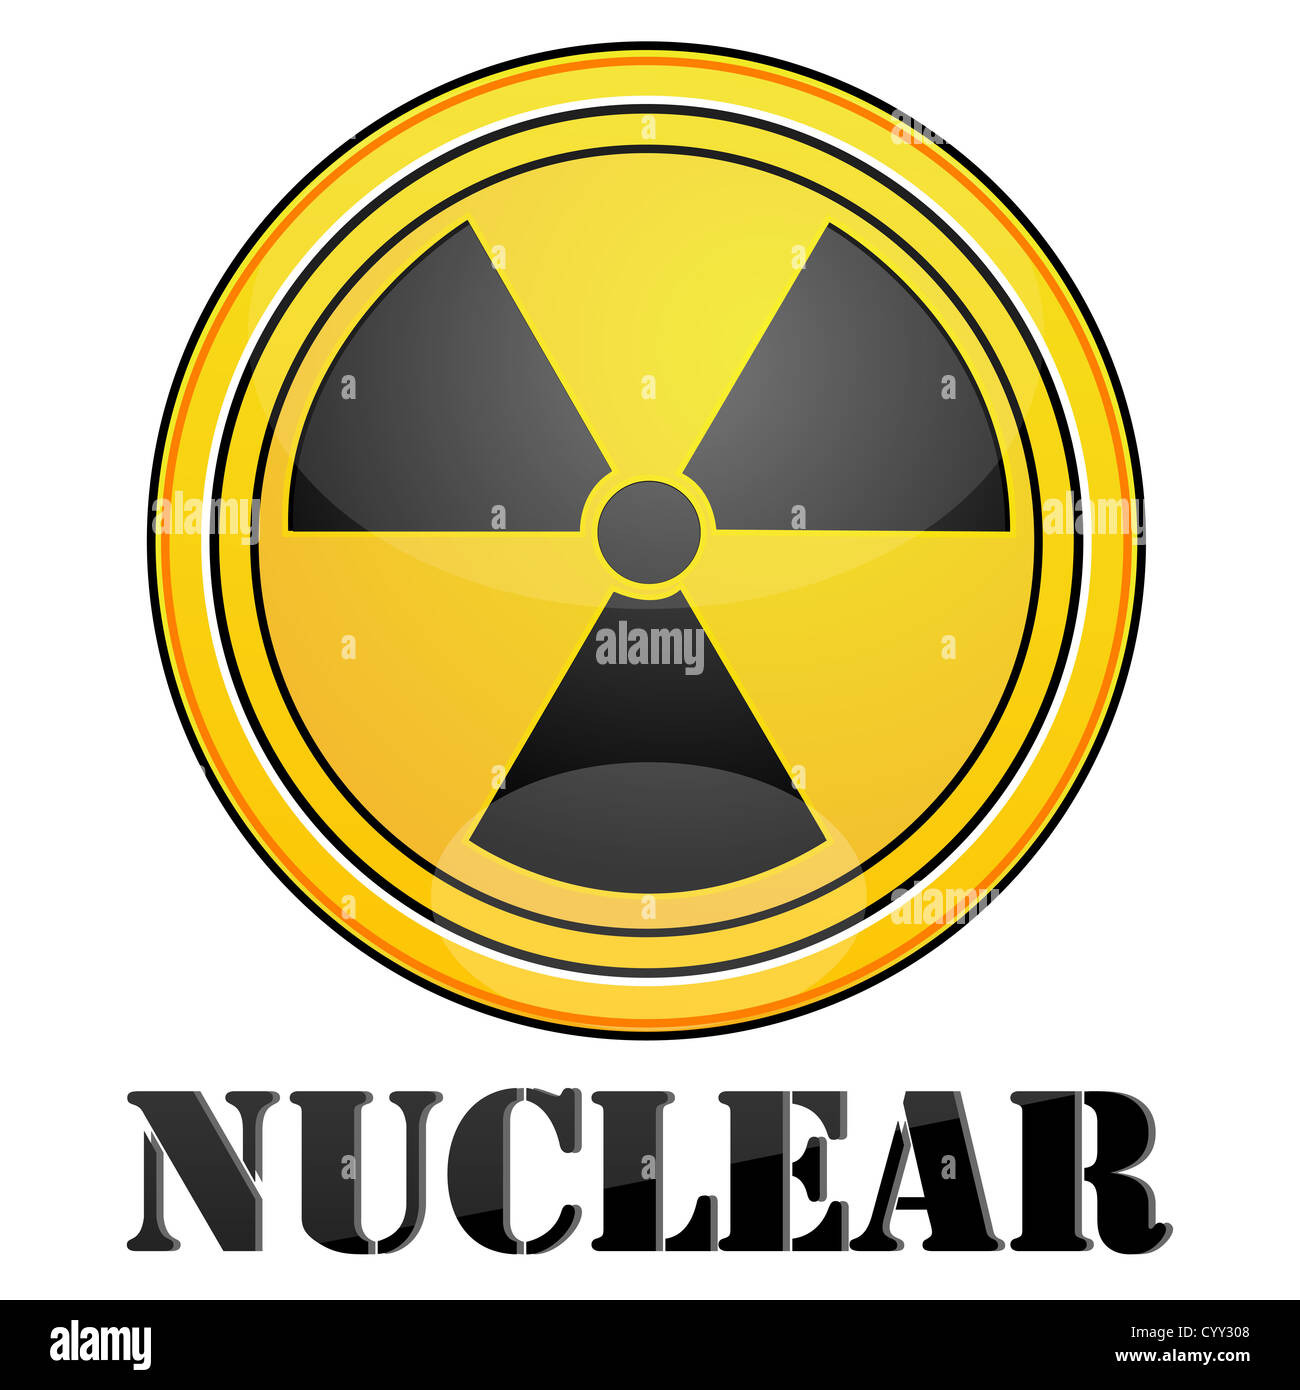 illustration of nuclear symbol on isolated background Stock Photo